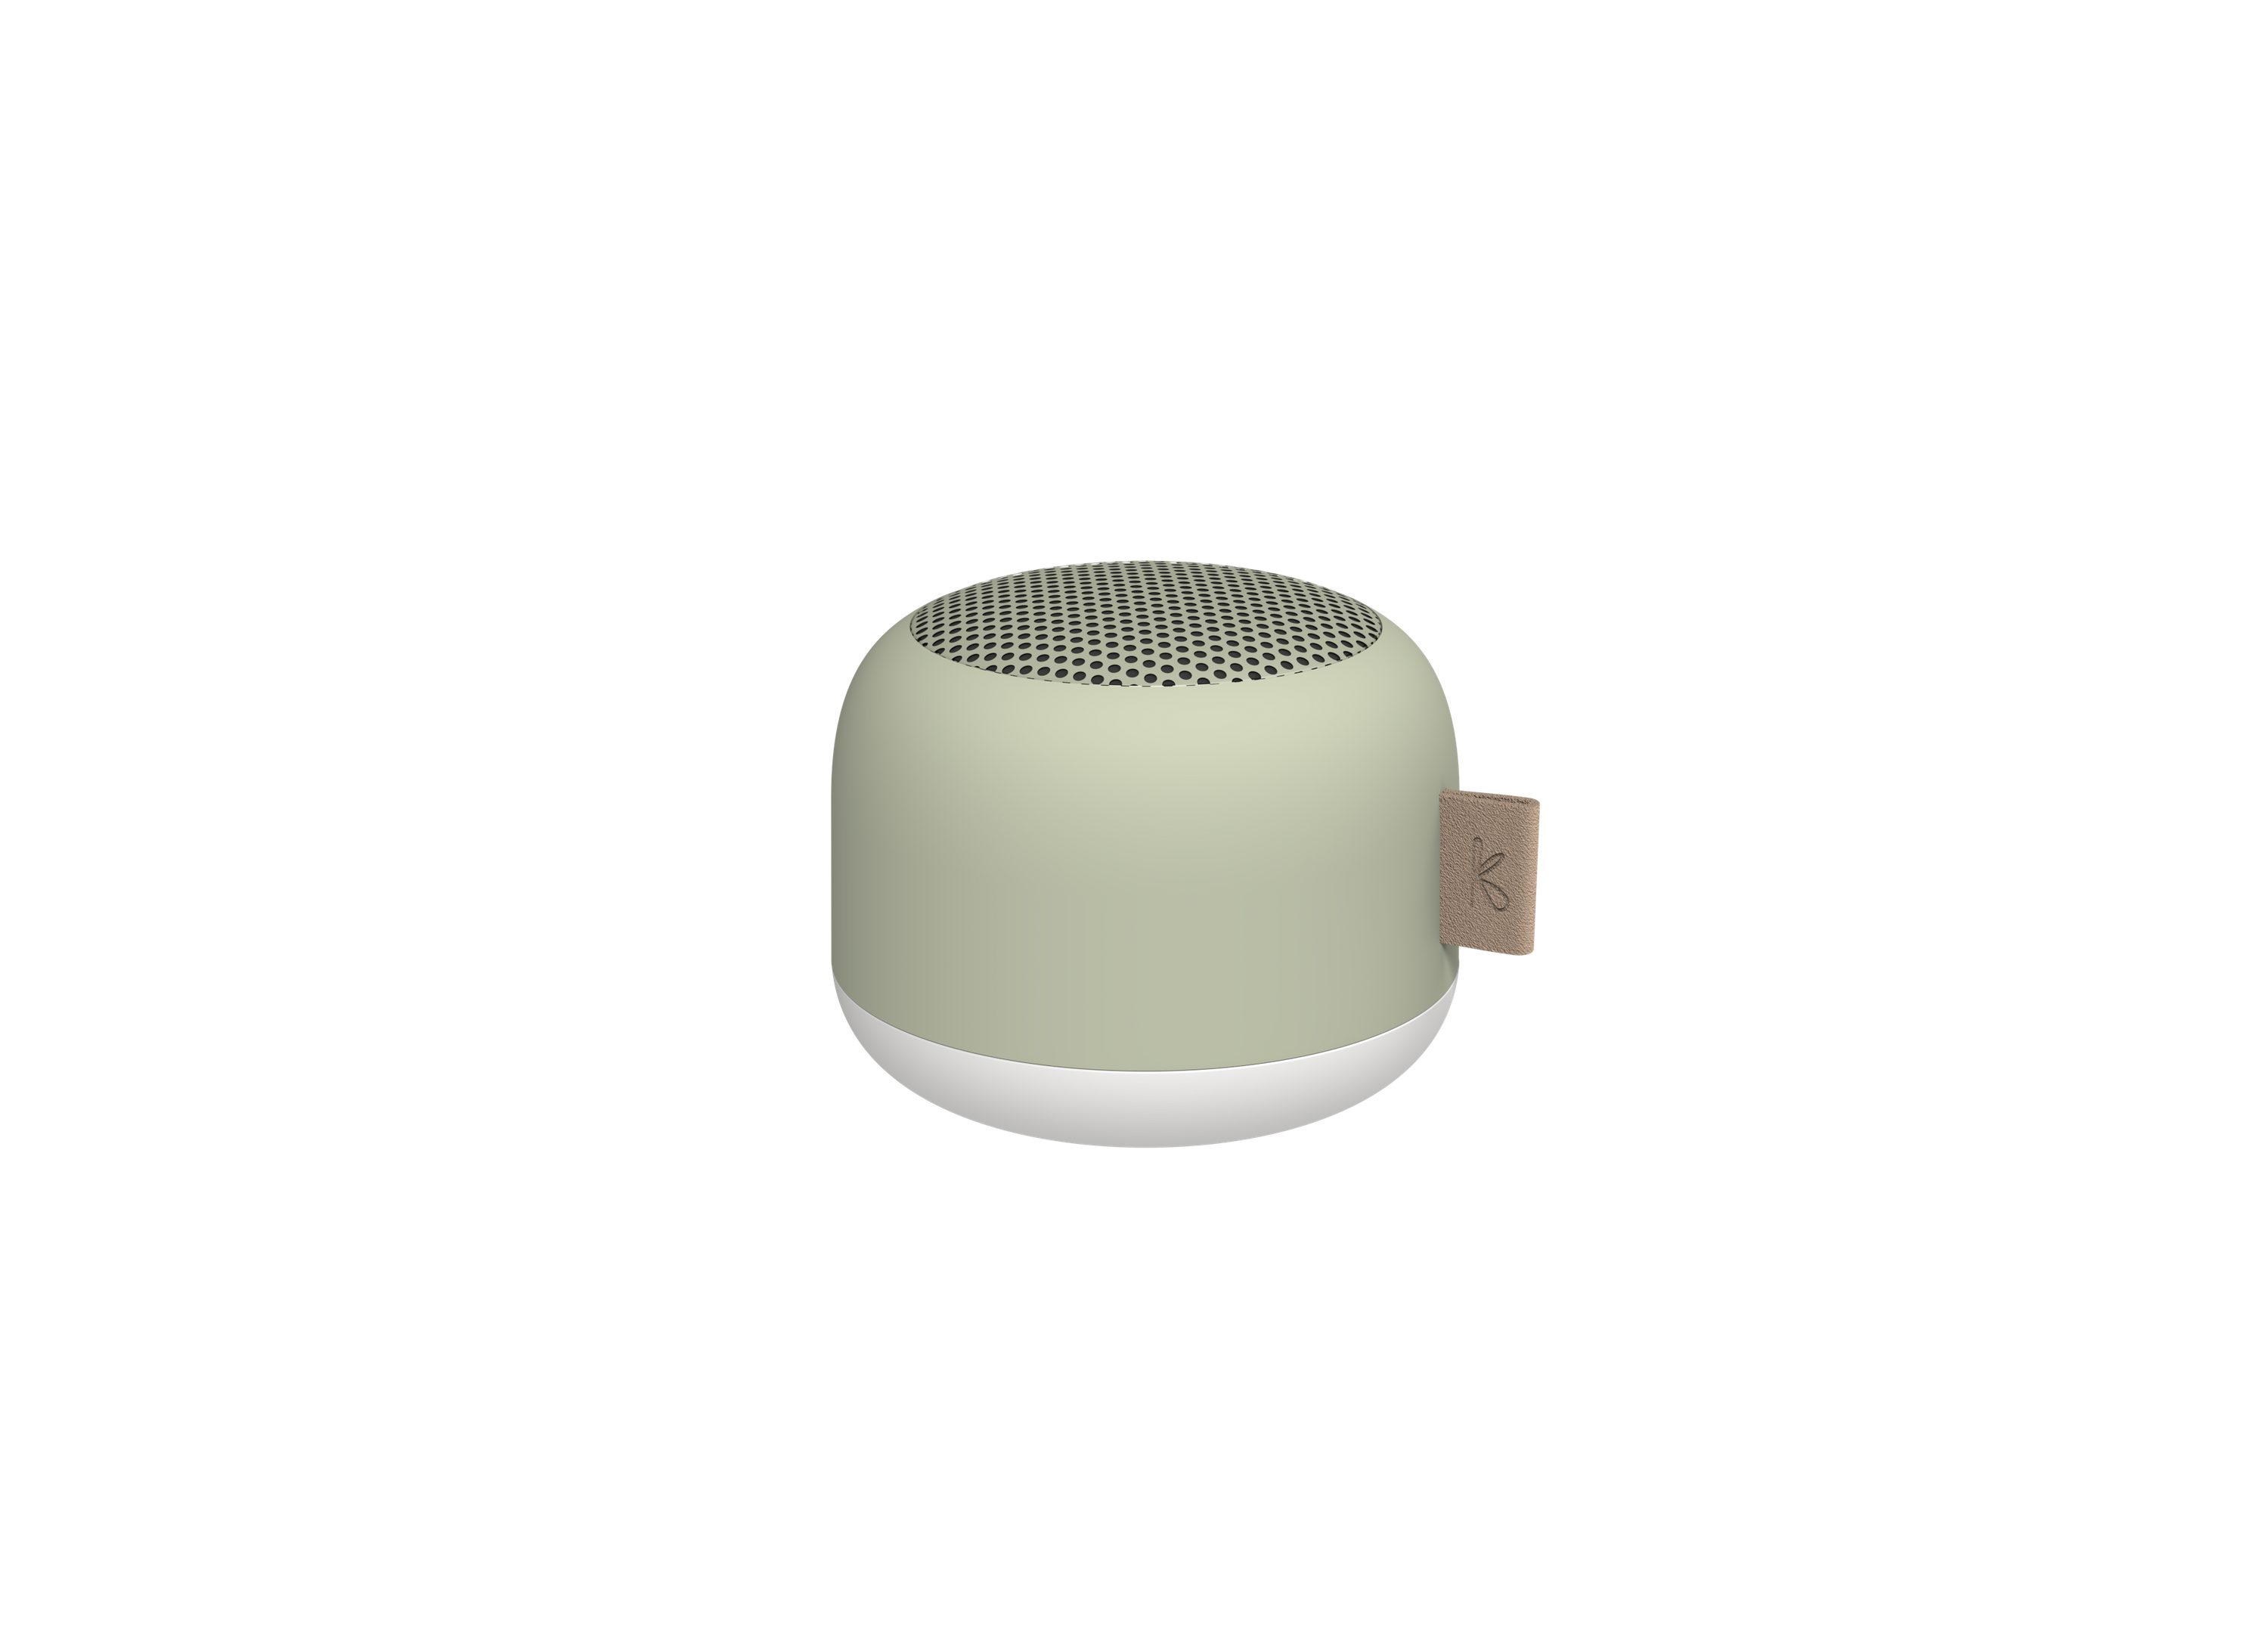 KREAFUNK aLIGHT, magnetischer Bluetooth Lautsprecher mit Licht Lautsprecher (aLIGHT, magnetischer Bluetooth Lautsprecher mit Licht) dusty olive